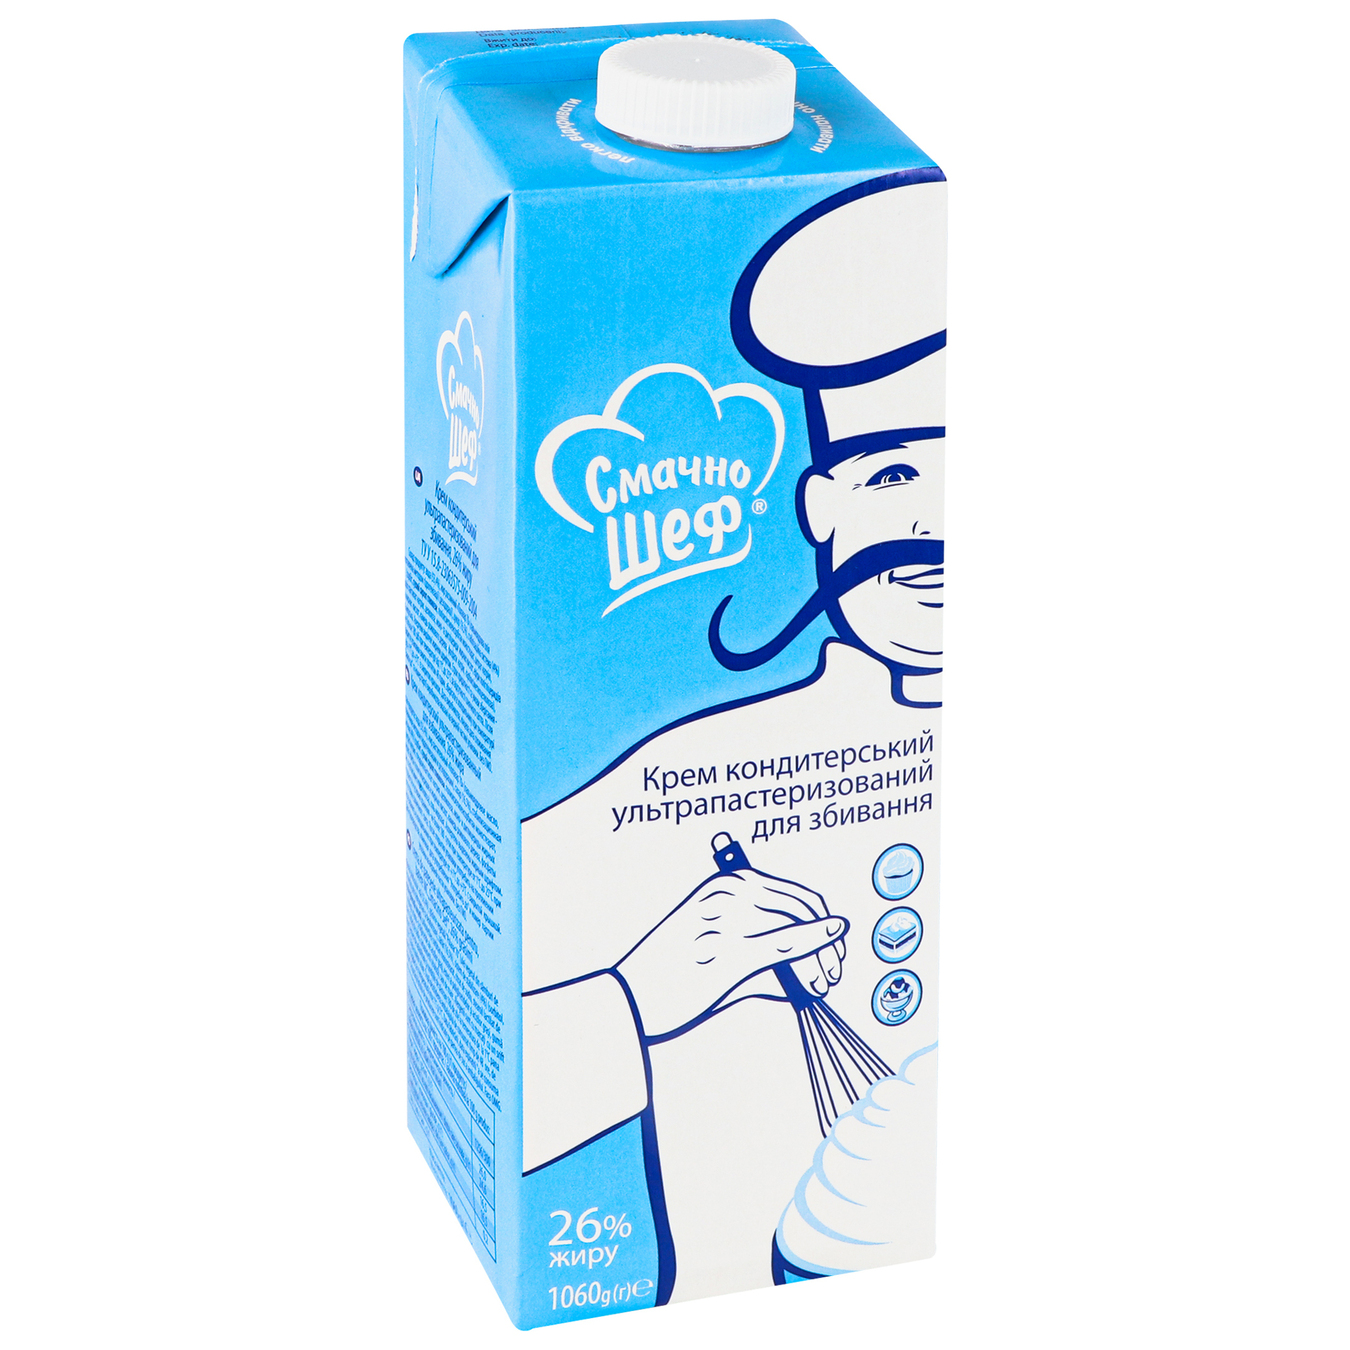 Cream Smachno Shef Сonfectionery UltraPasteurized 26% 1060g 6